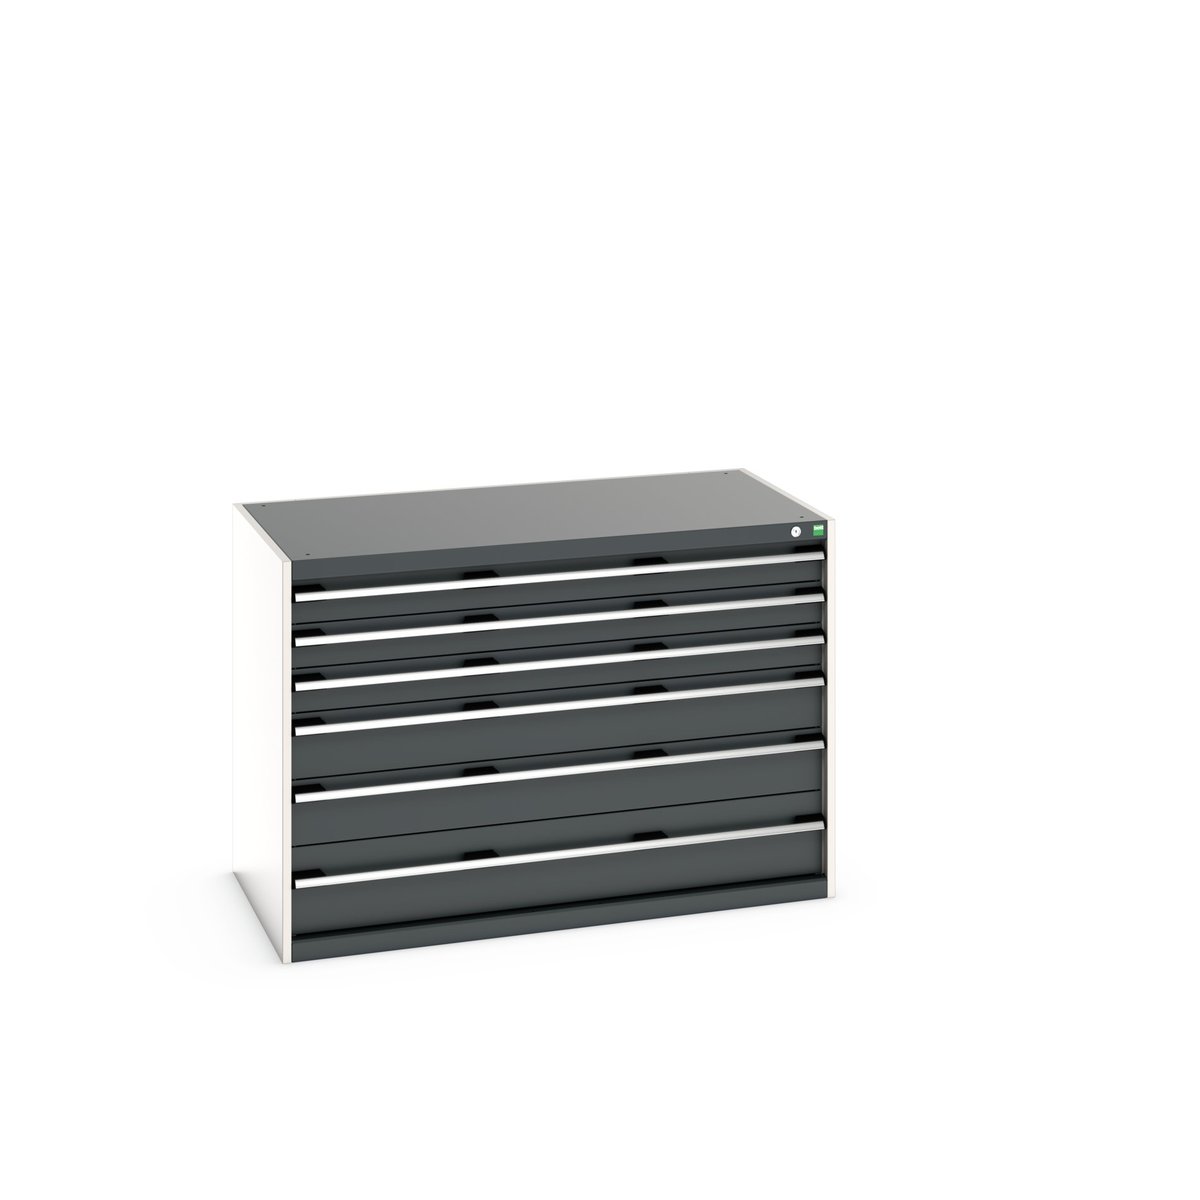 40030086. - cubio drawer cabinet